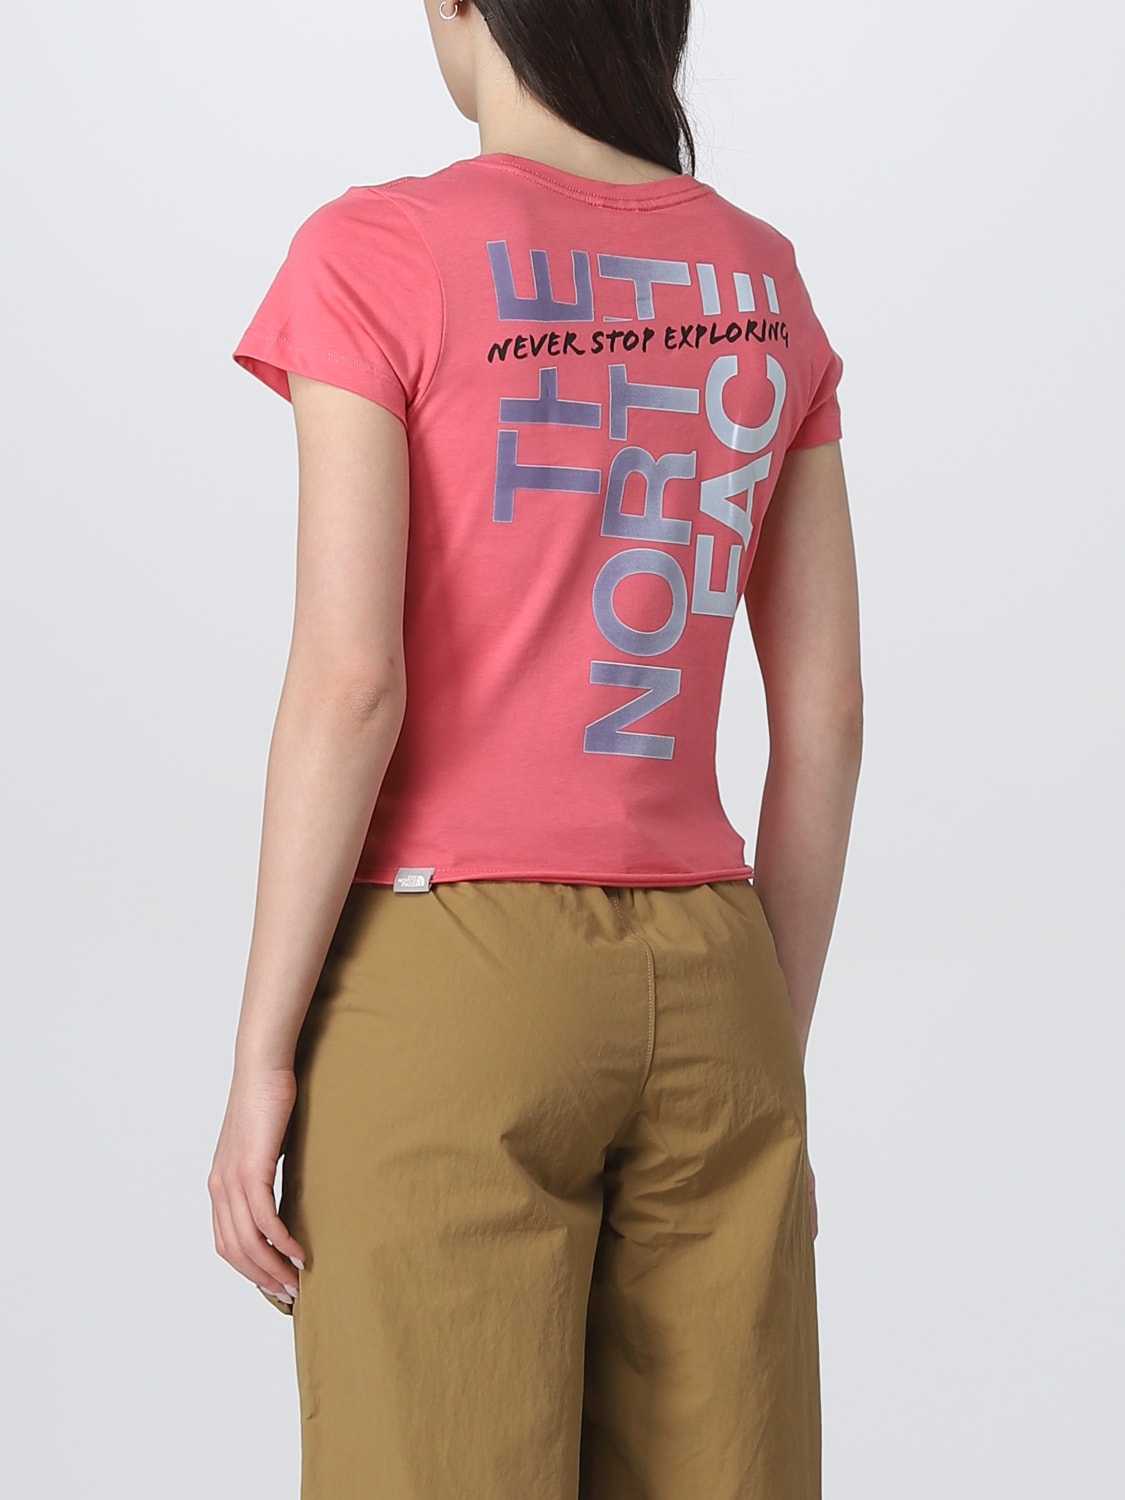 THE NORTH FACE: Camiseta para Rosa | Camiseta The North Face NF0A83FJ en línea en GIGLIO.COM